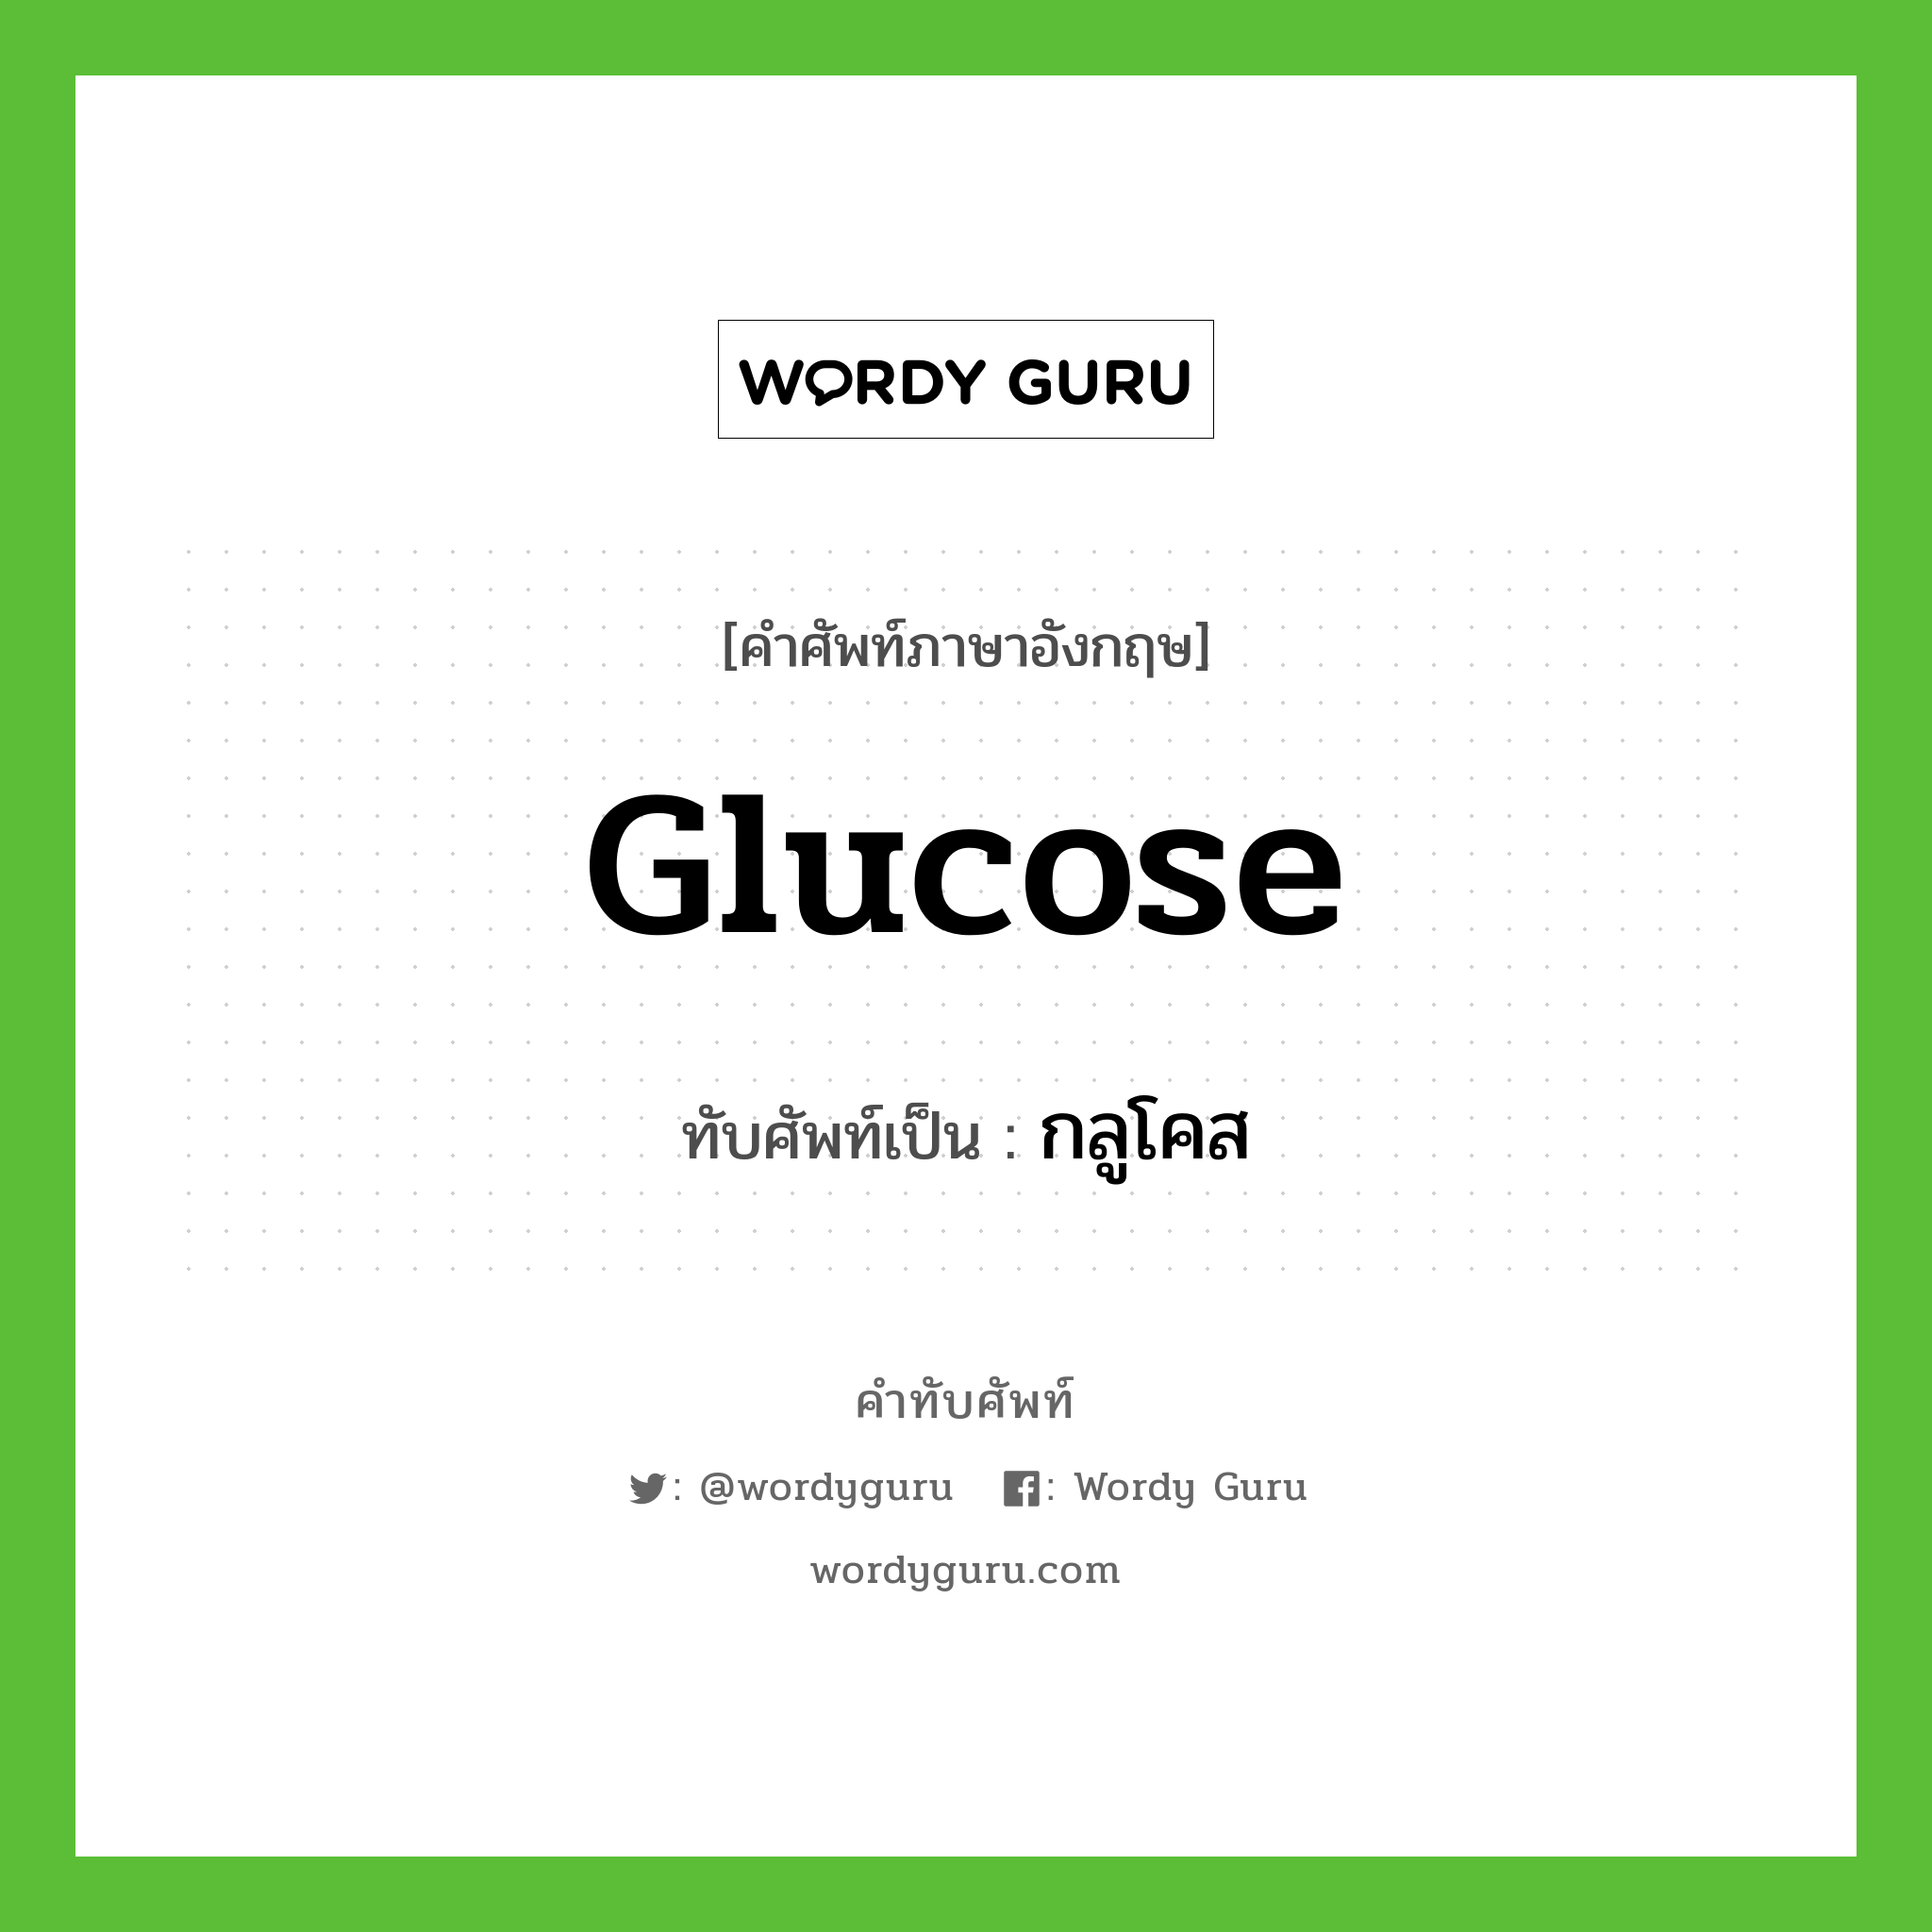 glucose เขียนเป็นคำไทยว่าอะไร?, คำศัพท์ภาษาอังกฤษ glucose ทับศัพท์เป็น กลูโคส